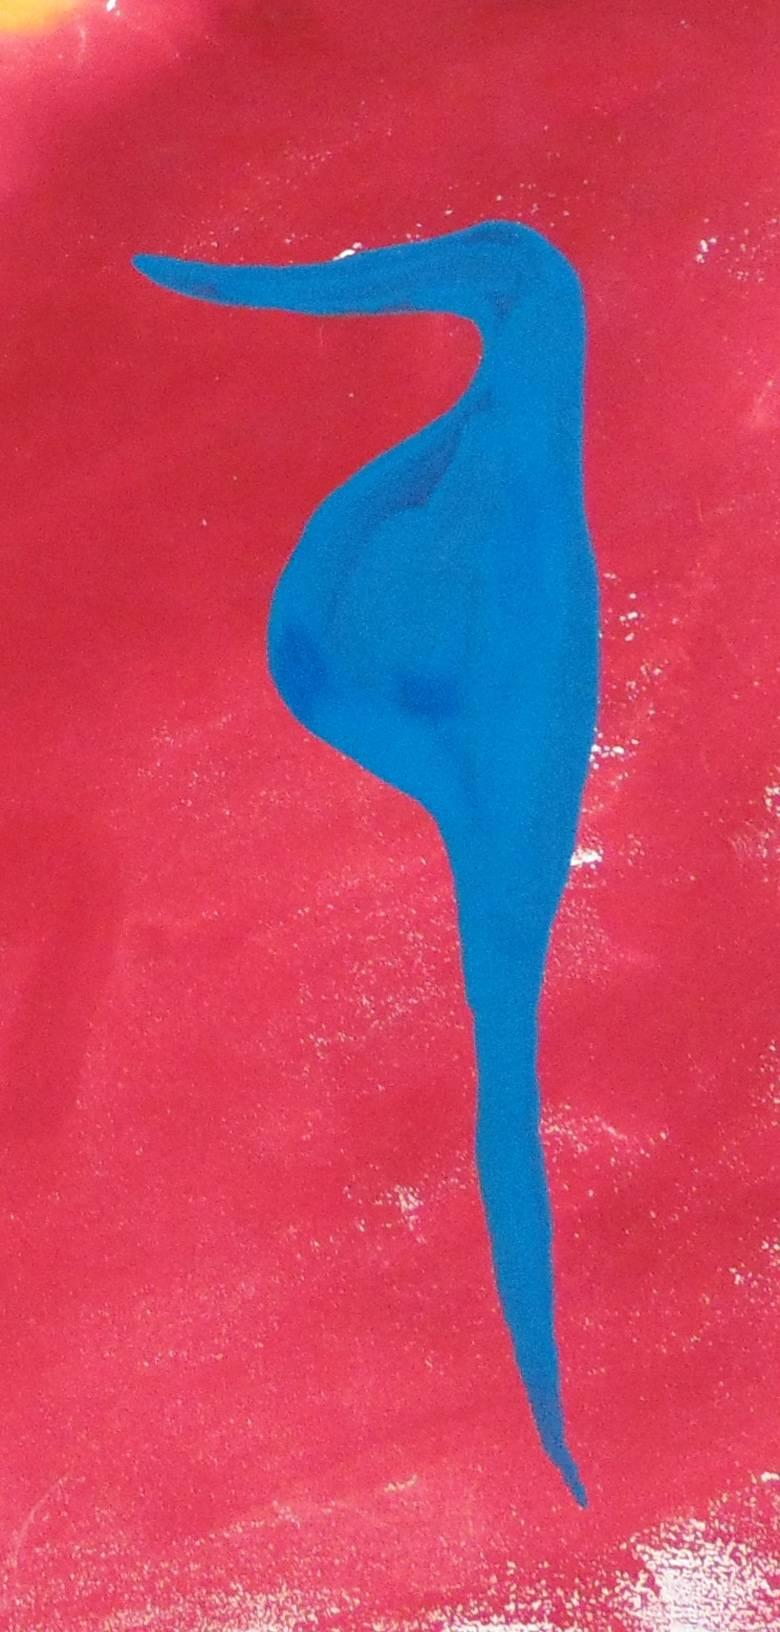 Seahorse - Kinetic Art by Alexander Calder